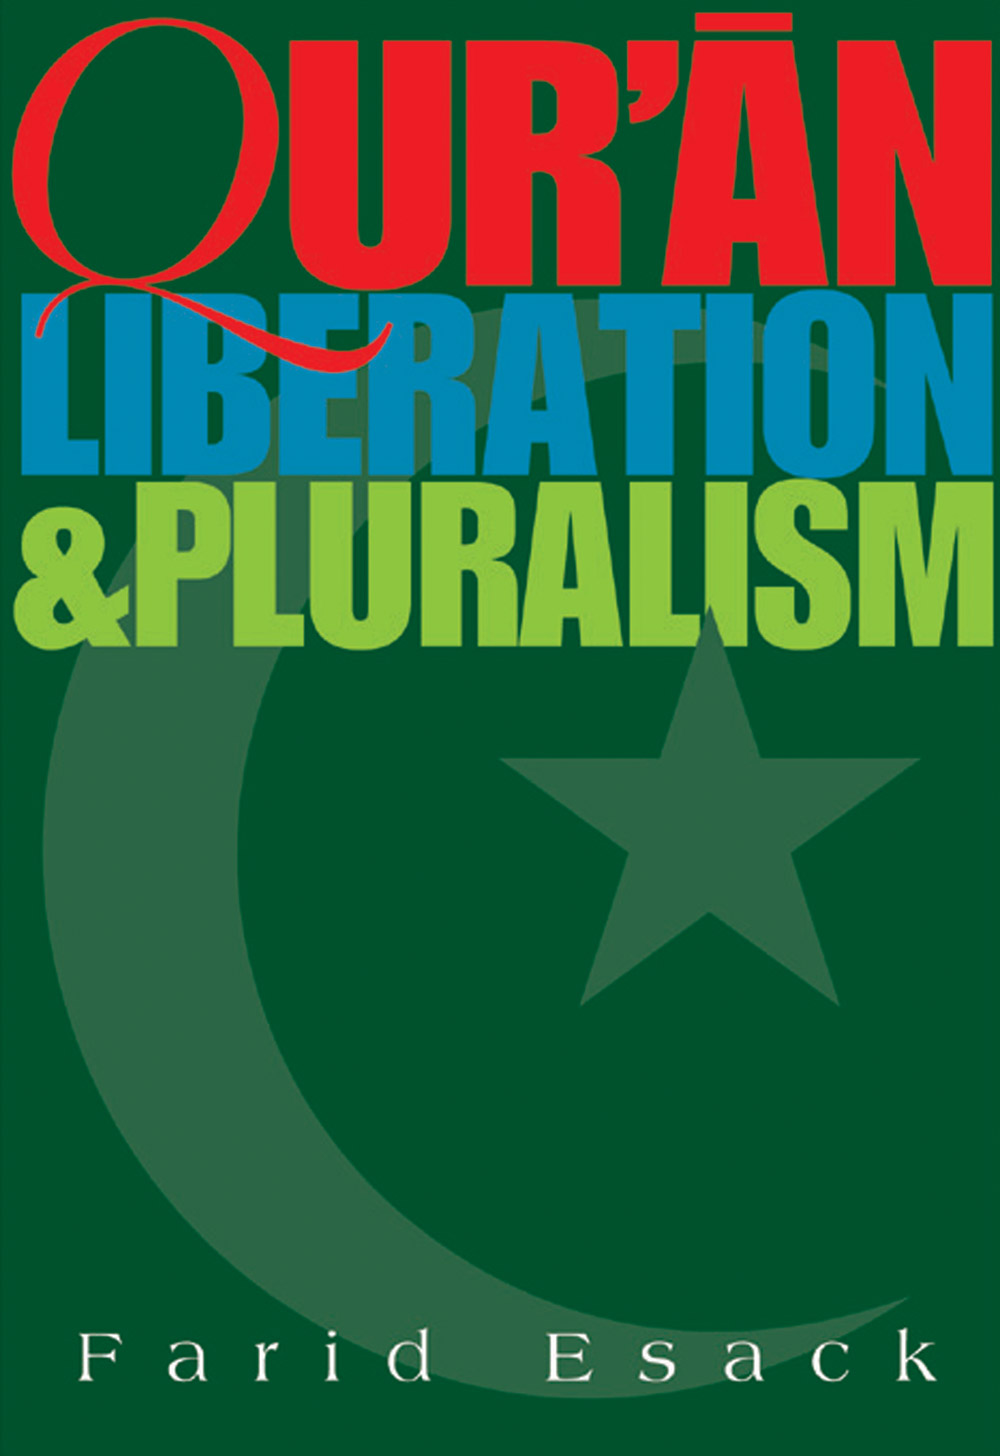 quran-liberation-and-pluralism